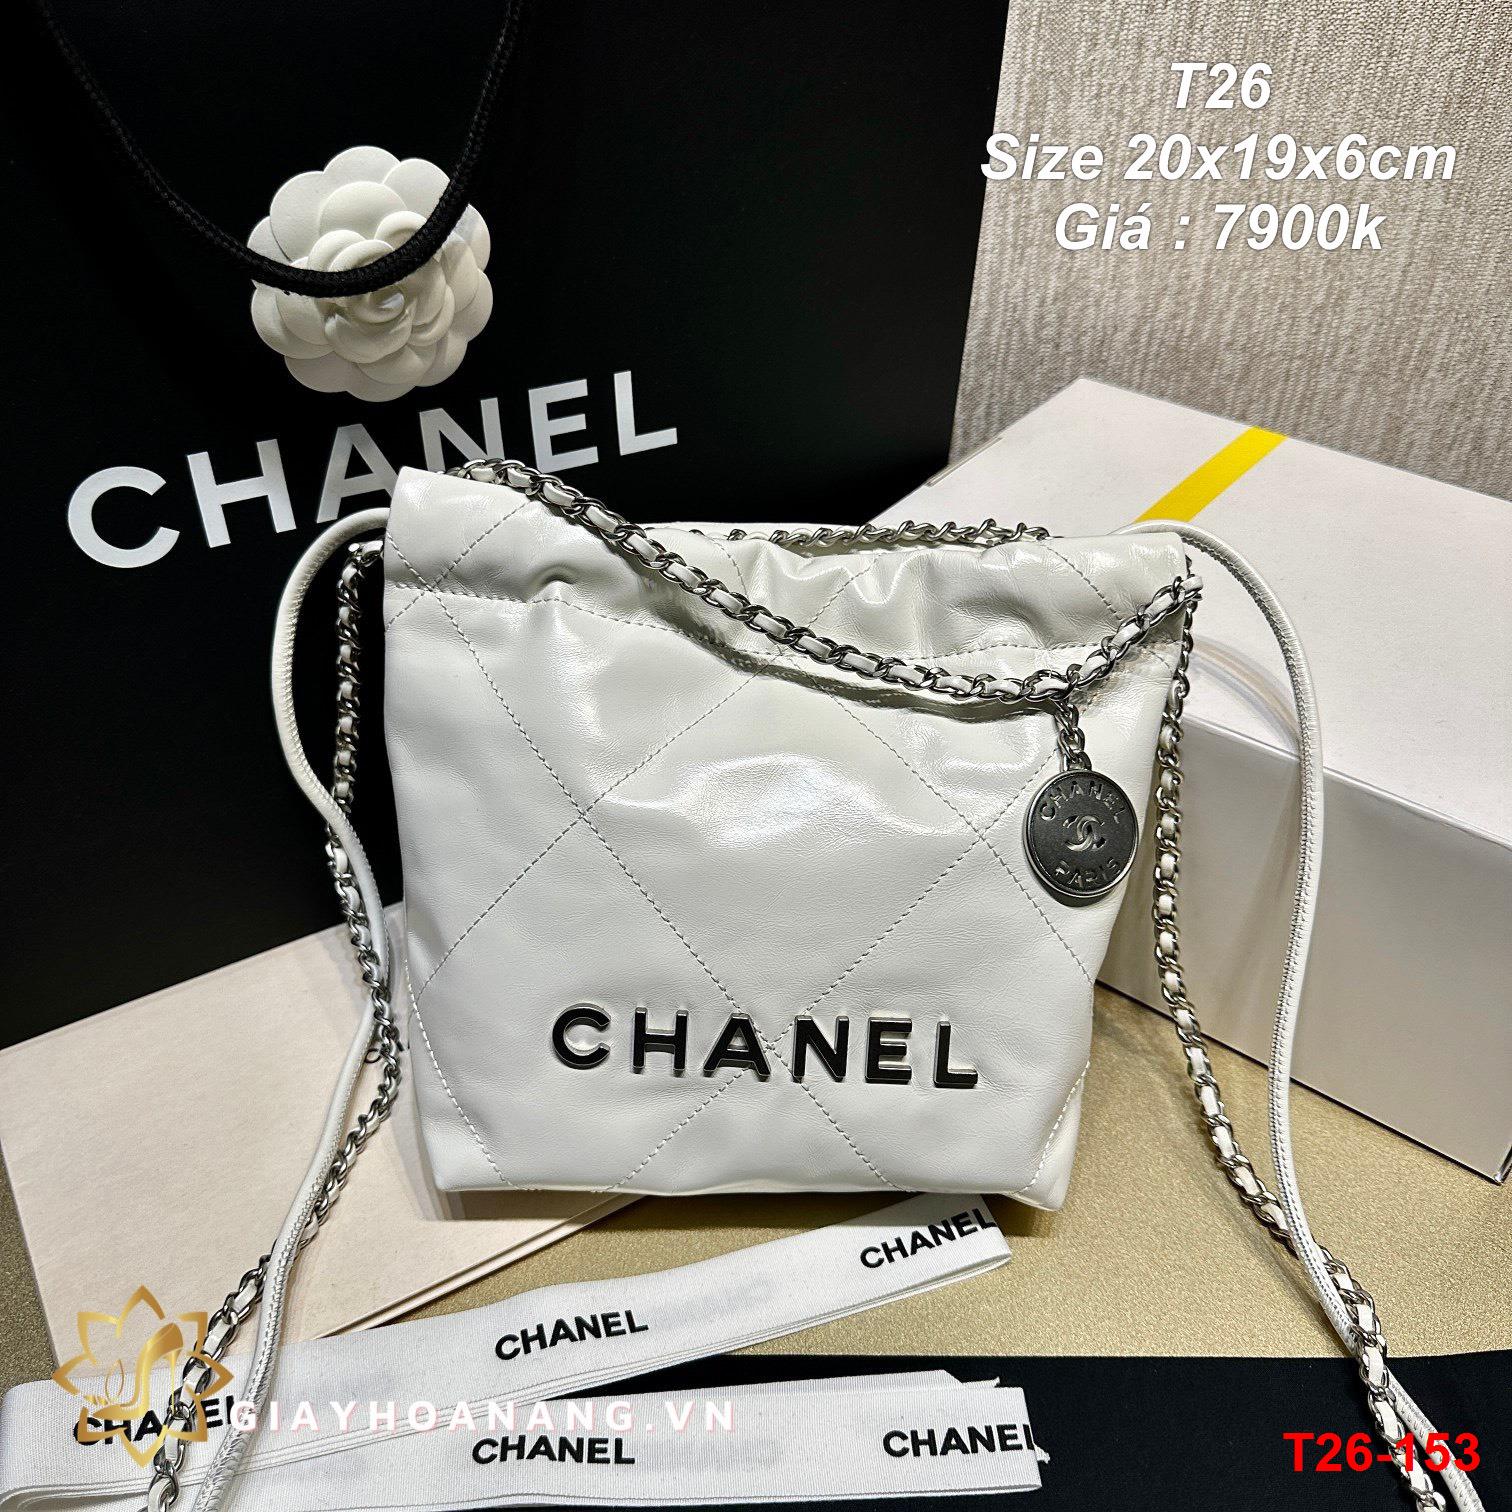 T26-153 Chanel túi size 20cm siêu cấp